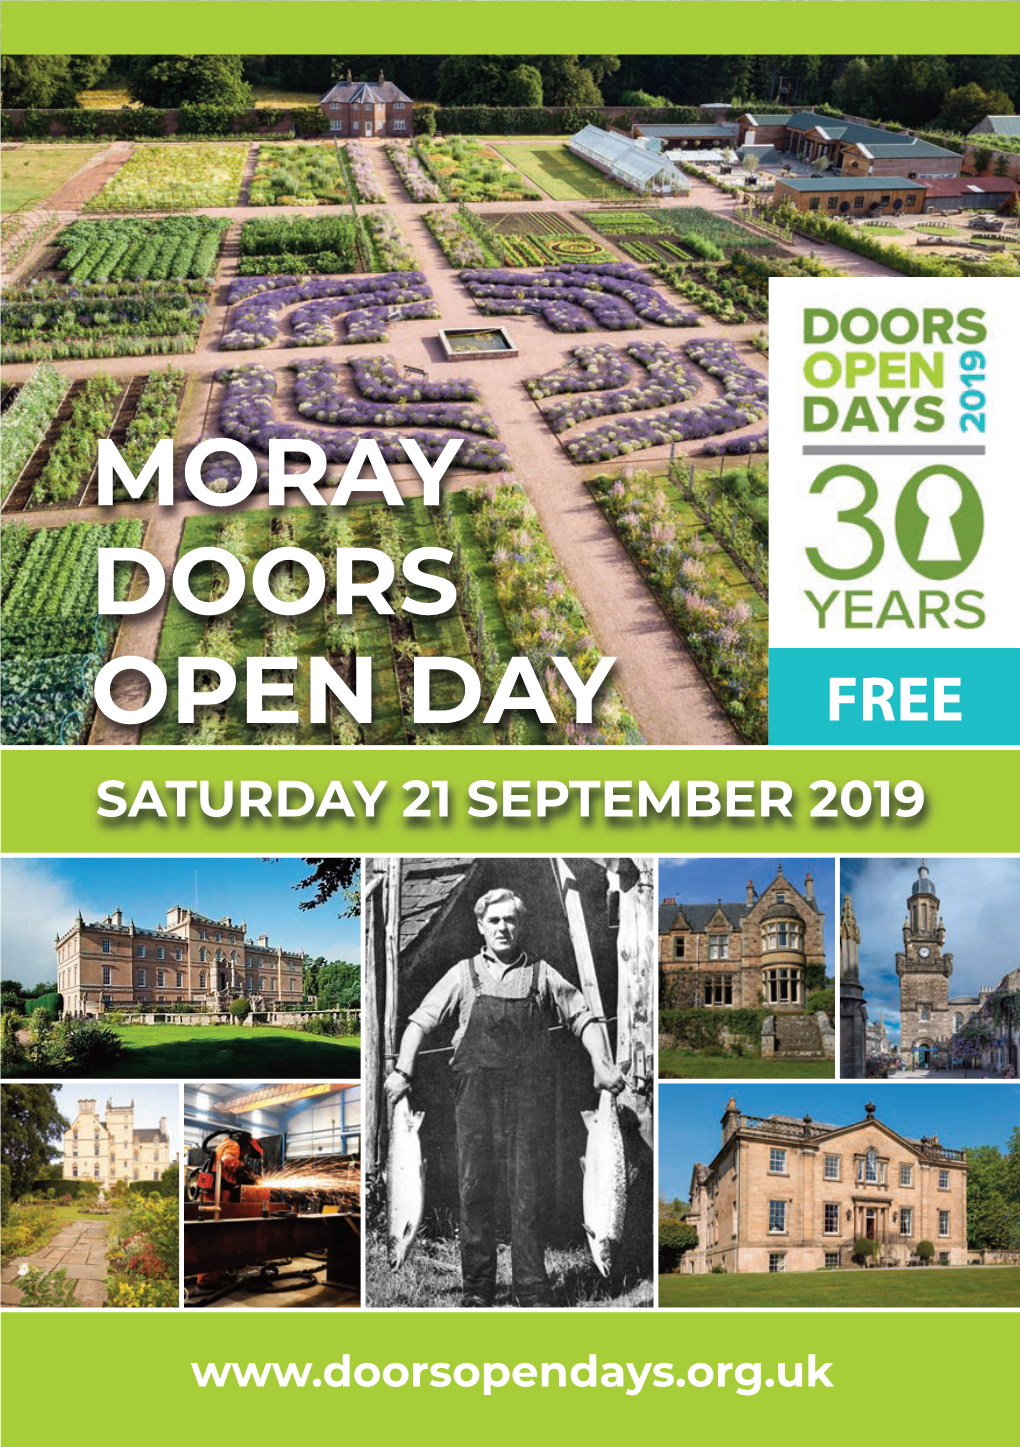 Moray Doors Open Day Free Saturday 21 September 2019